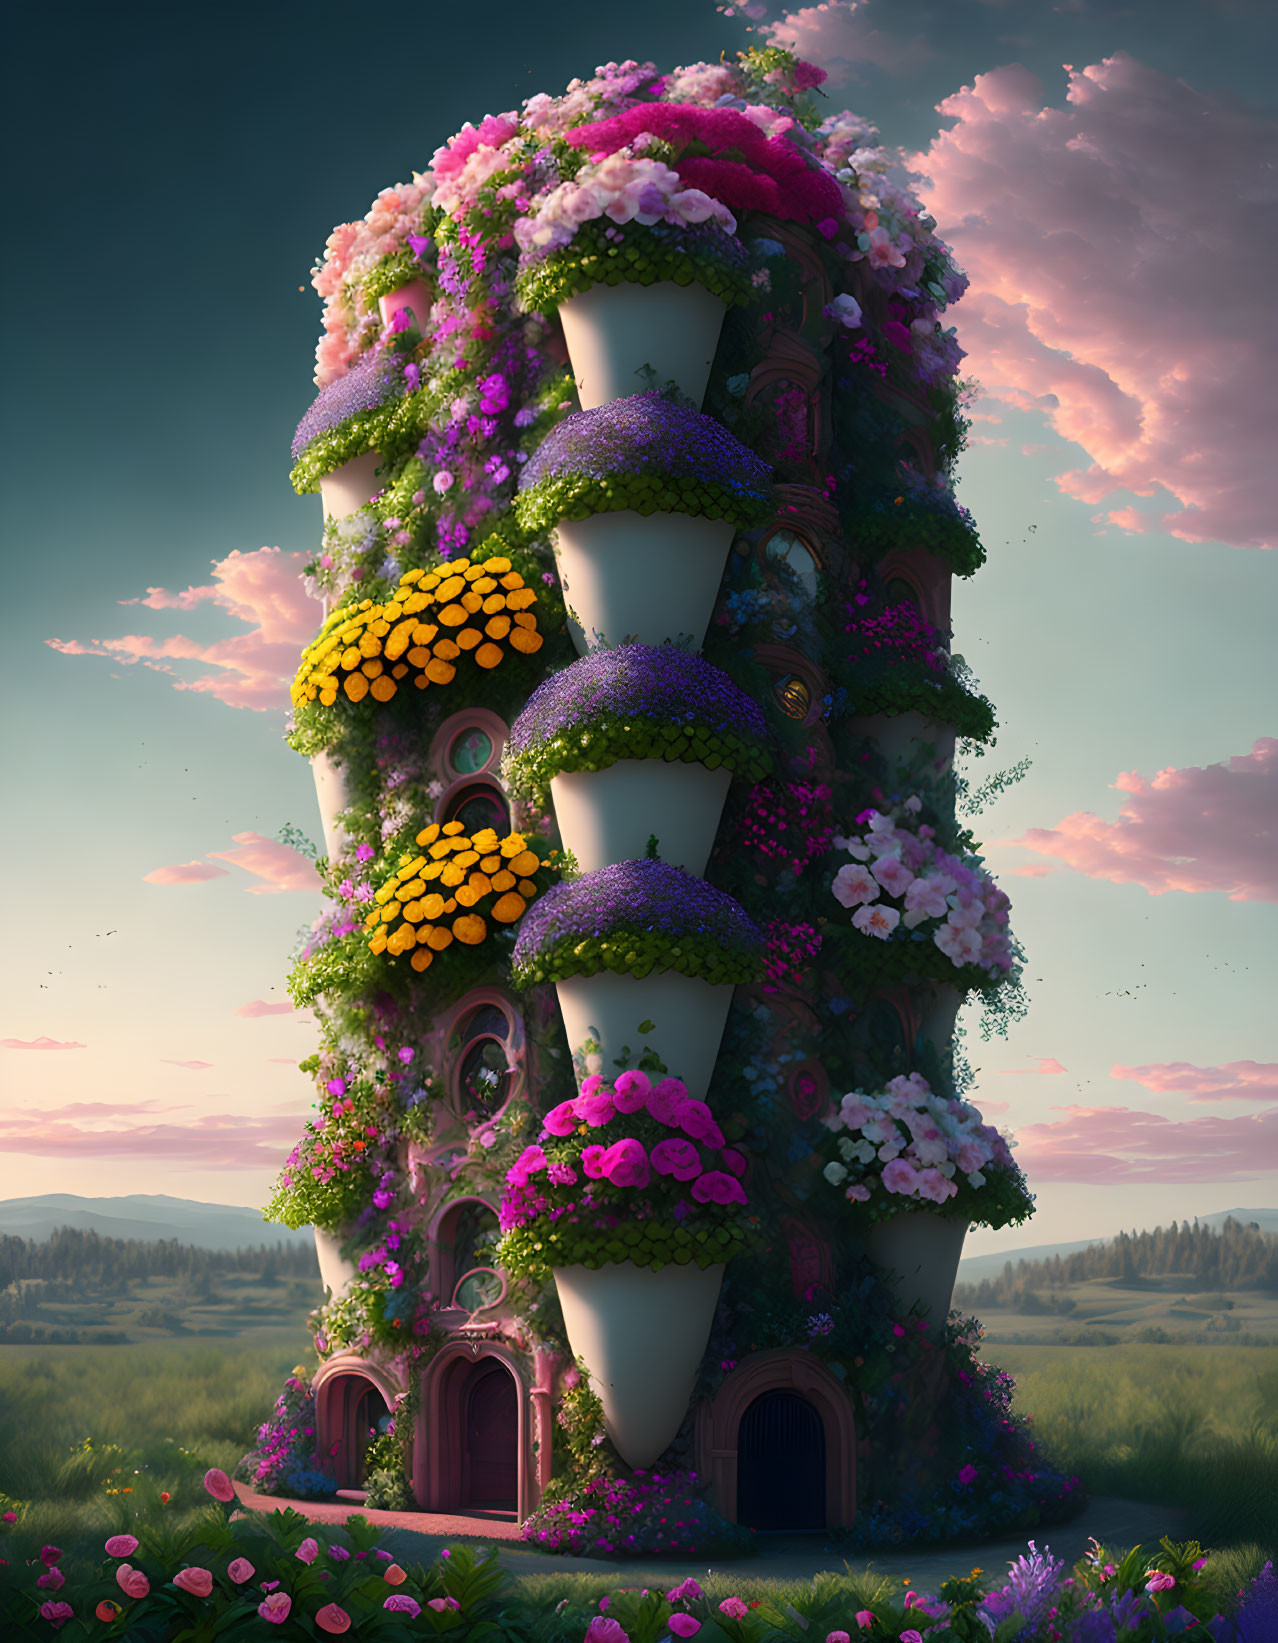 flower tower